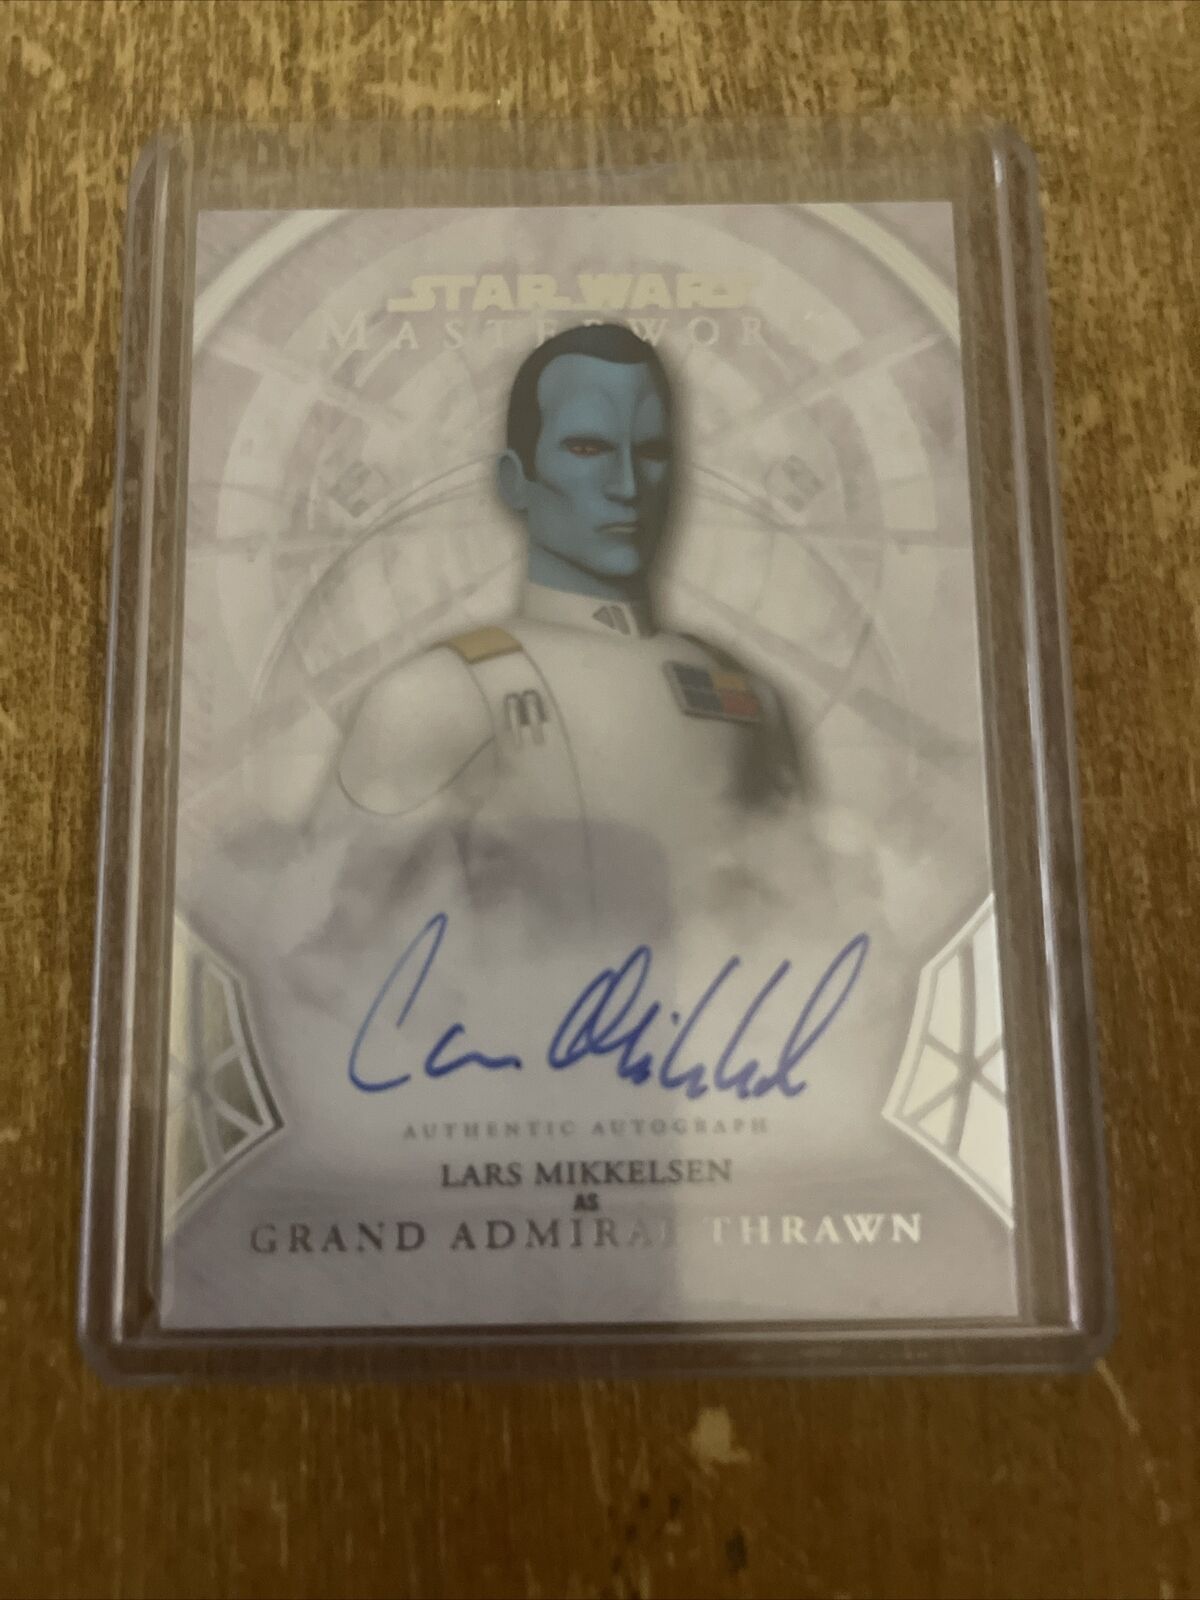 2018 Star Wars Masterwork Lars Mikkelsen as Grand Admiral Thrawn autograph card 